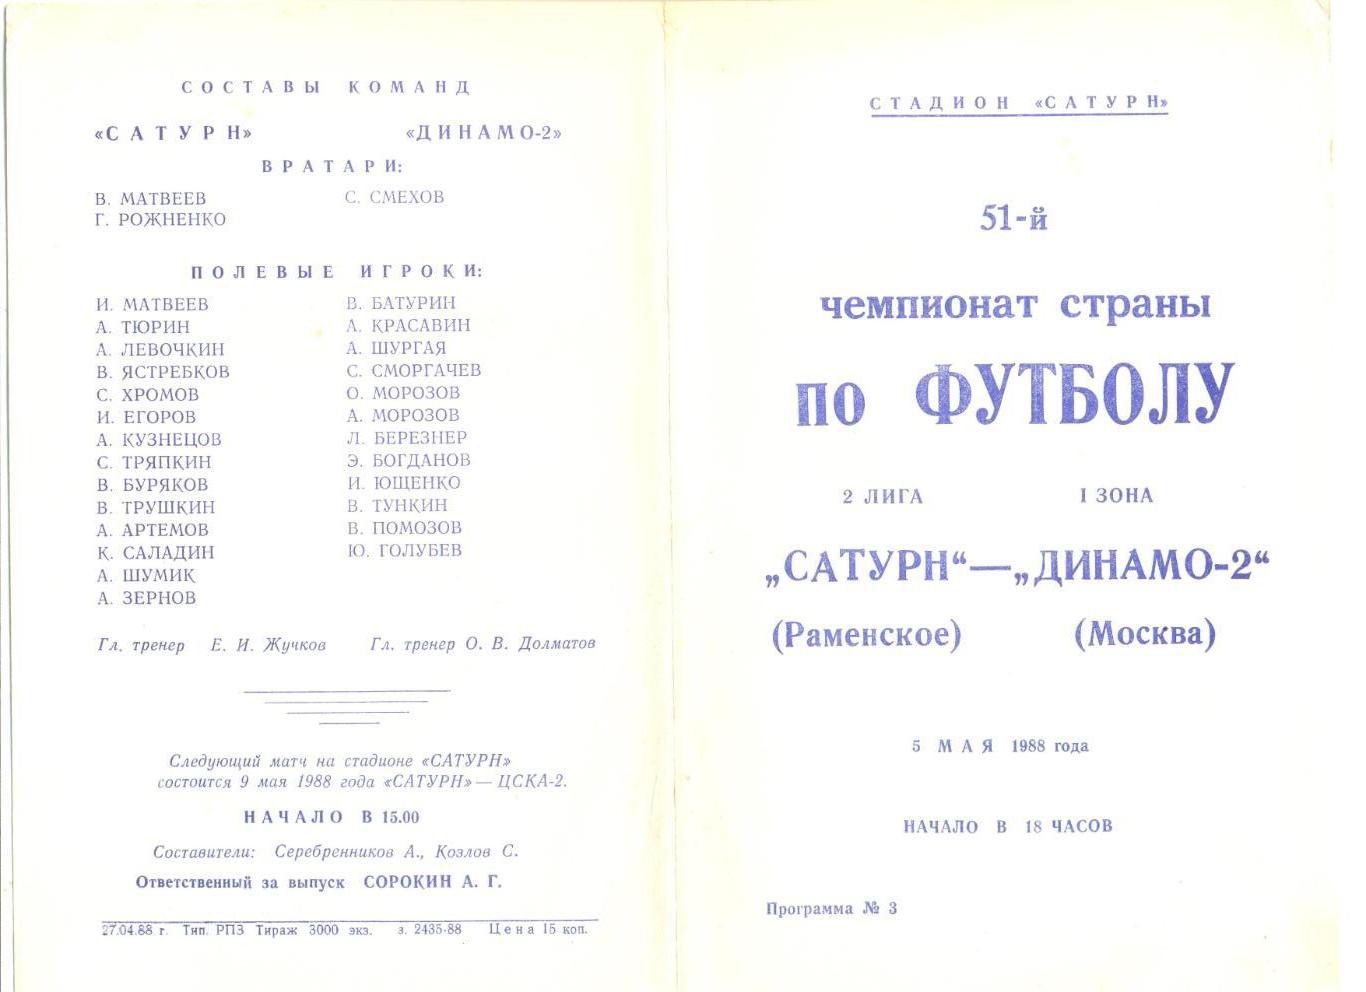 Сатурн Раменское - Динамо-2 Москва 05.05.1988 г.